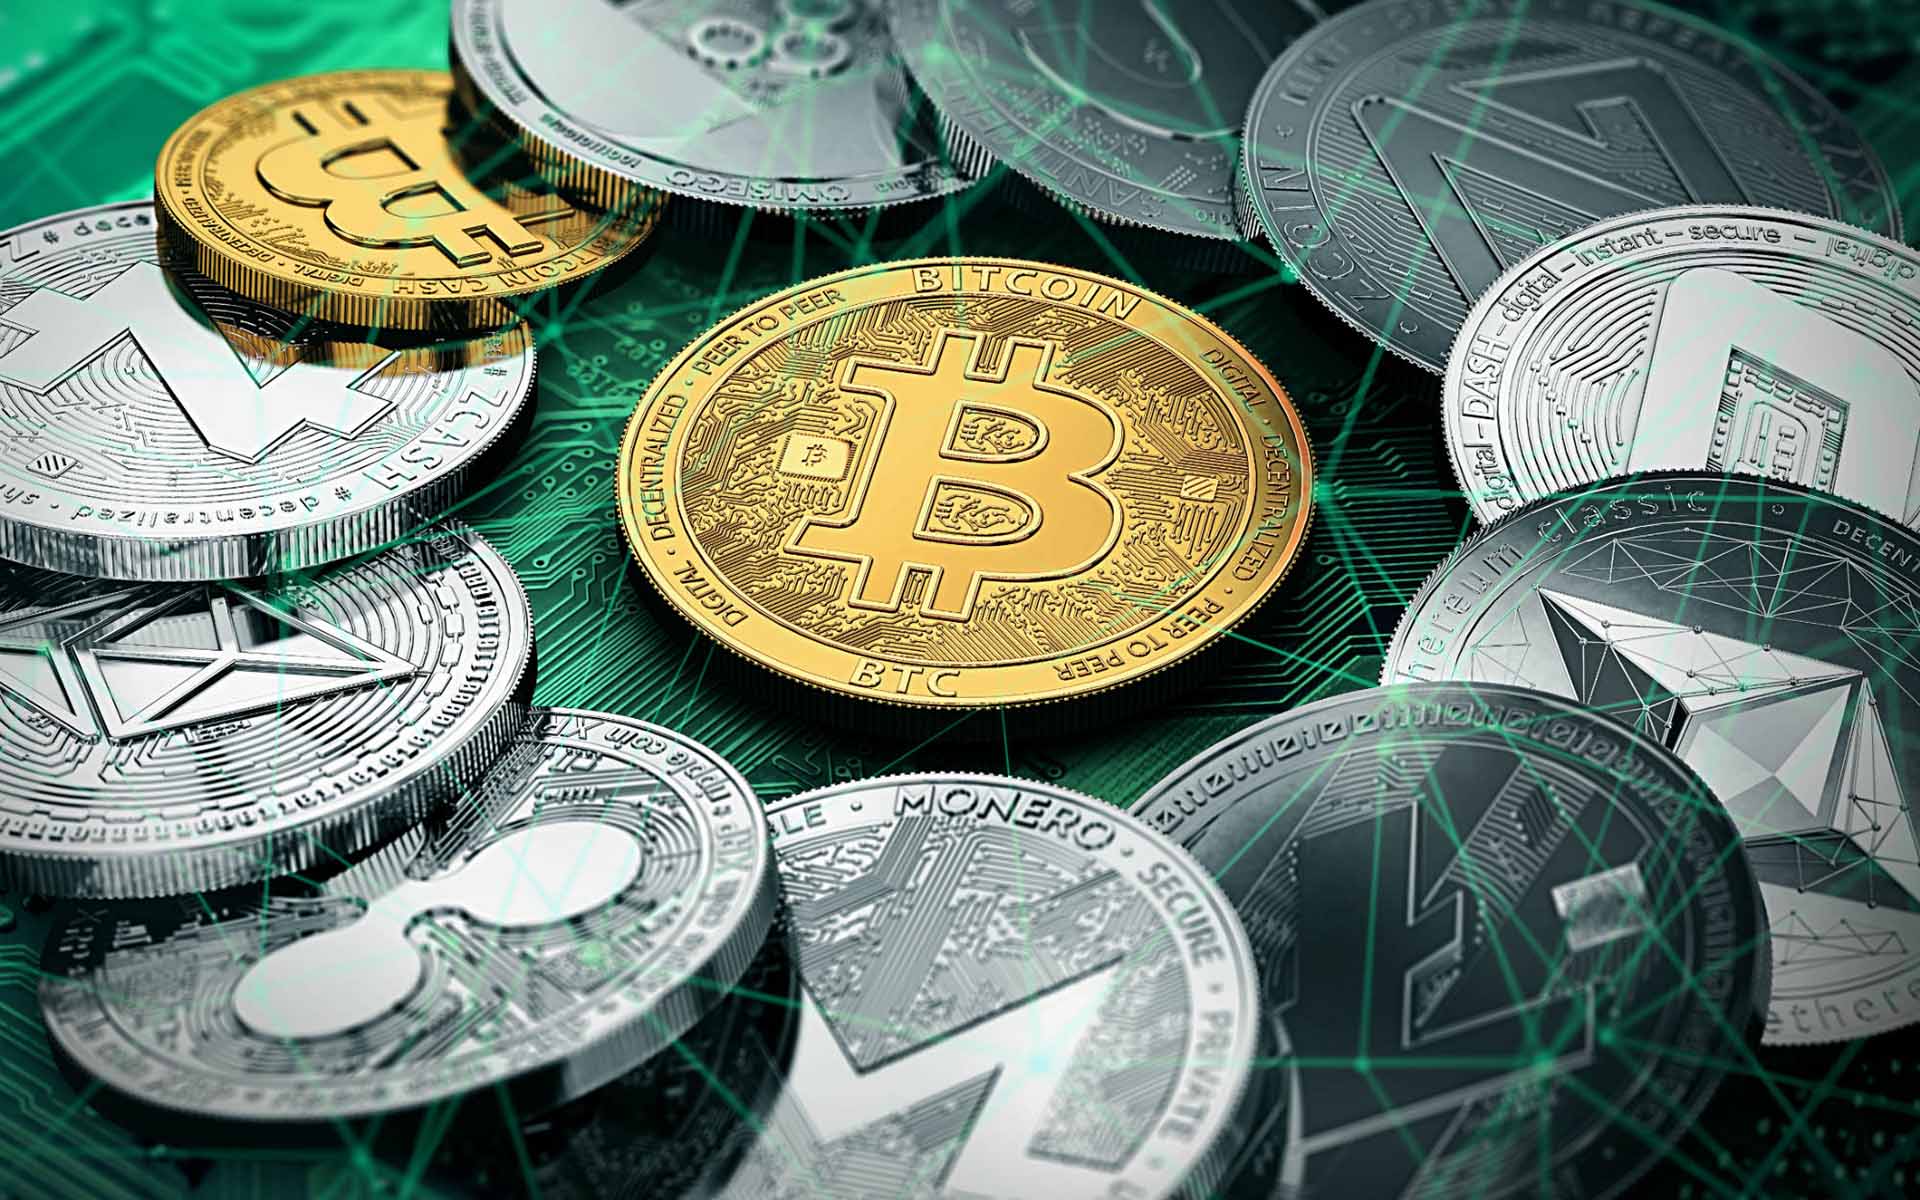 befektetés bitcoin vs altcoin